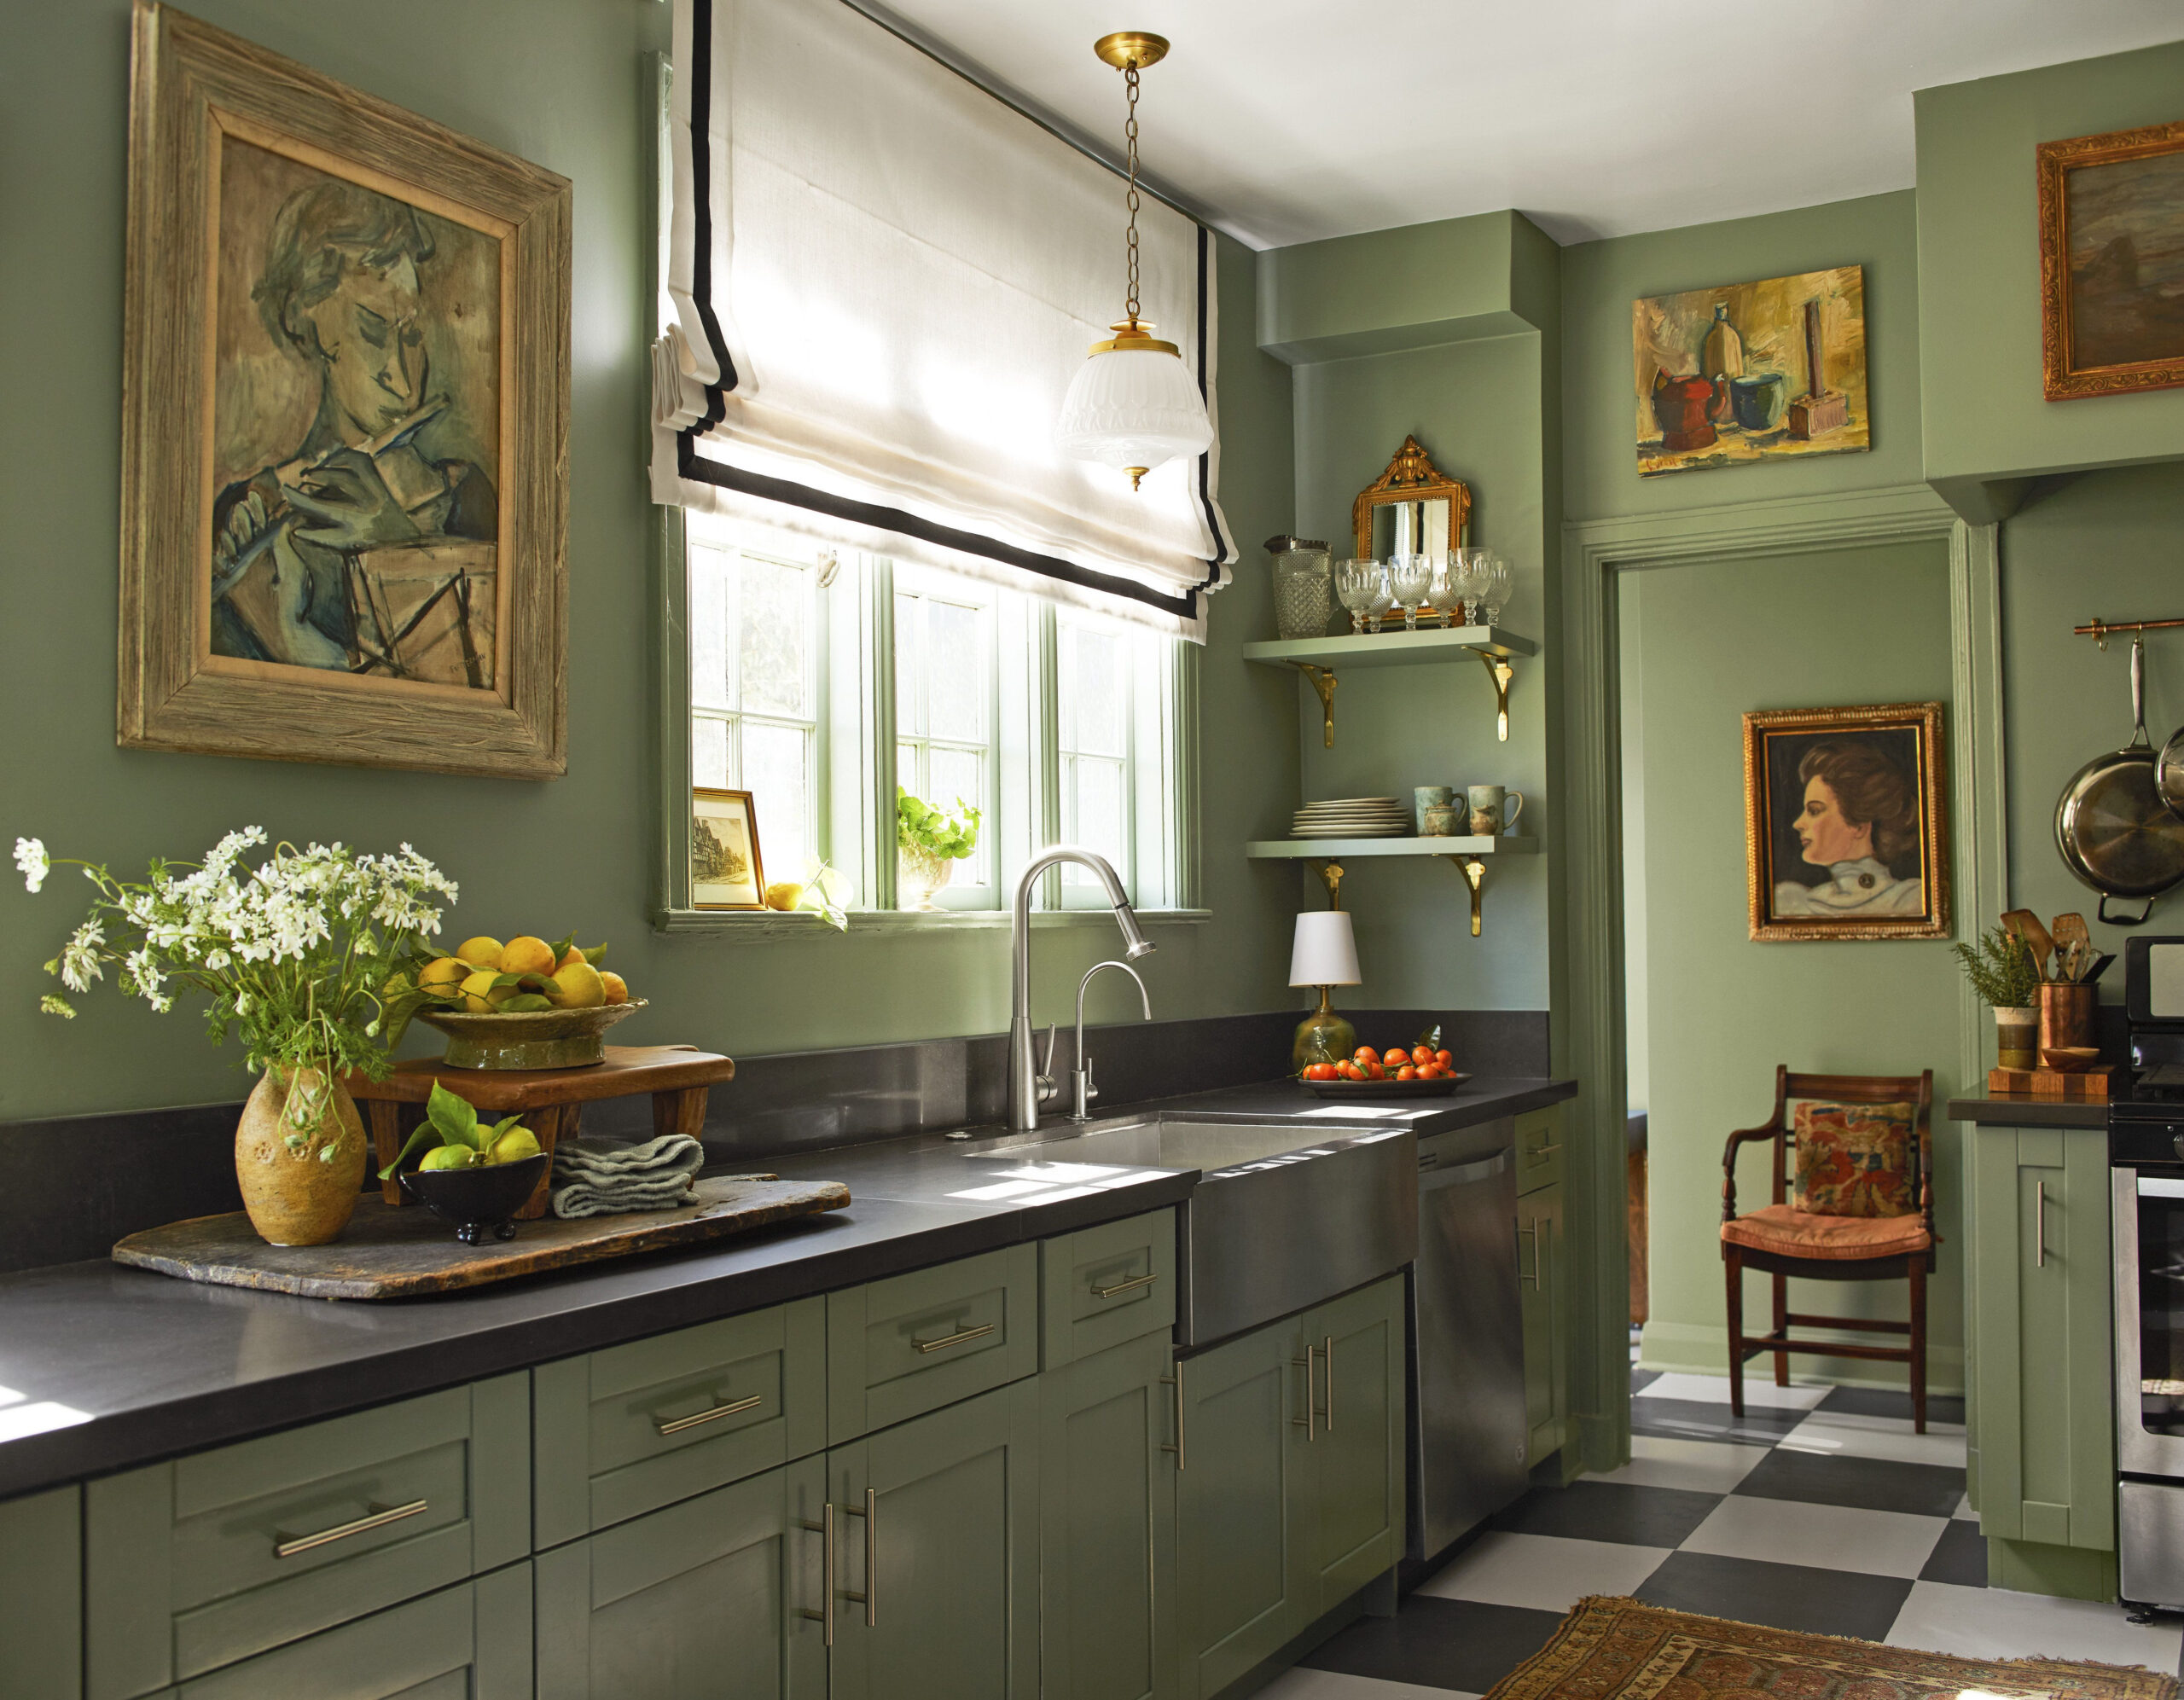 Best Kitchen Wall Decor Ideas - Beautiful Kitchen Decorations